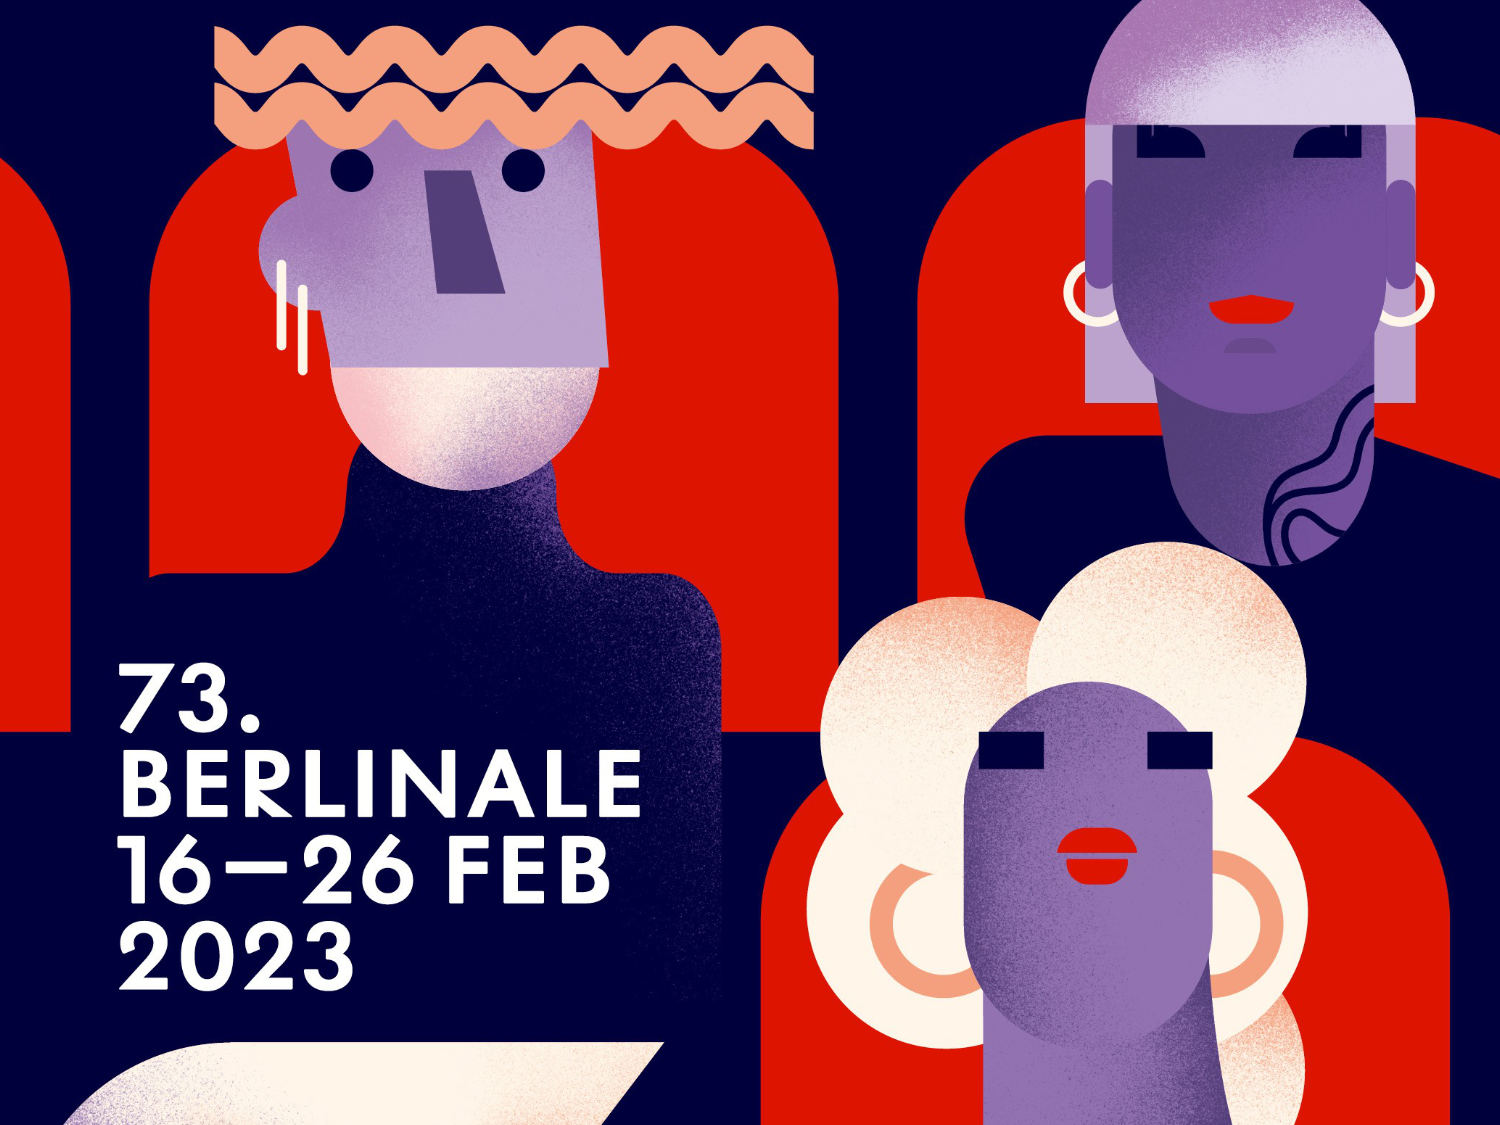 Berlinale 2023 Celebration event DJ